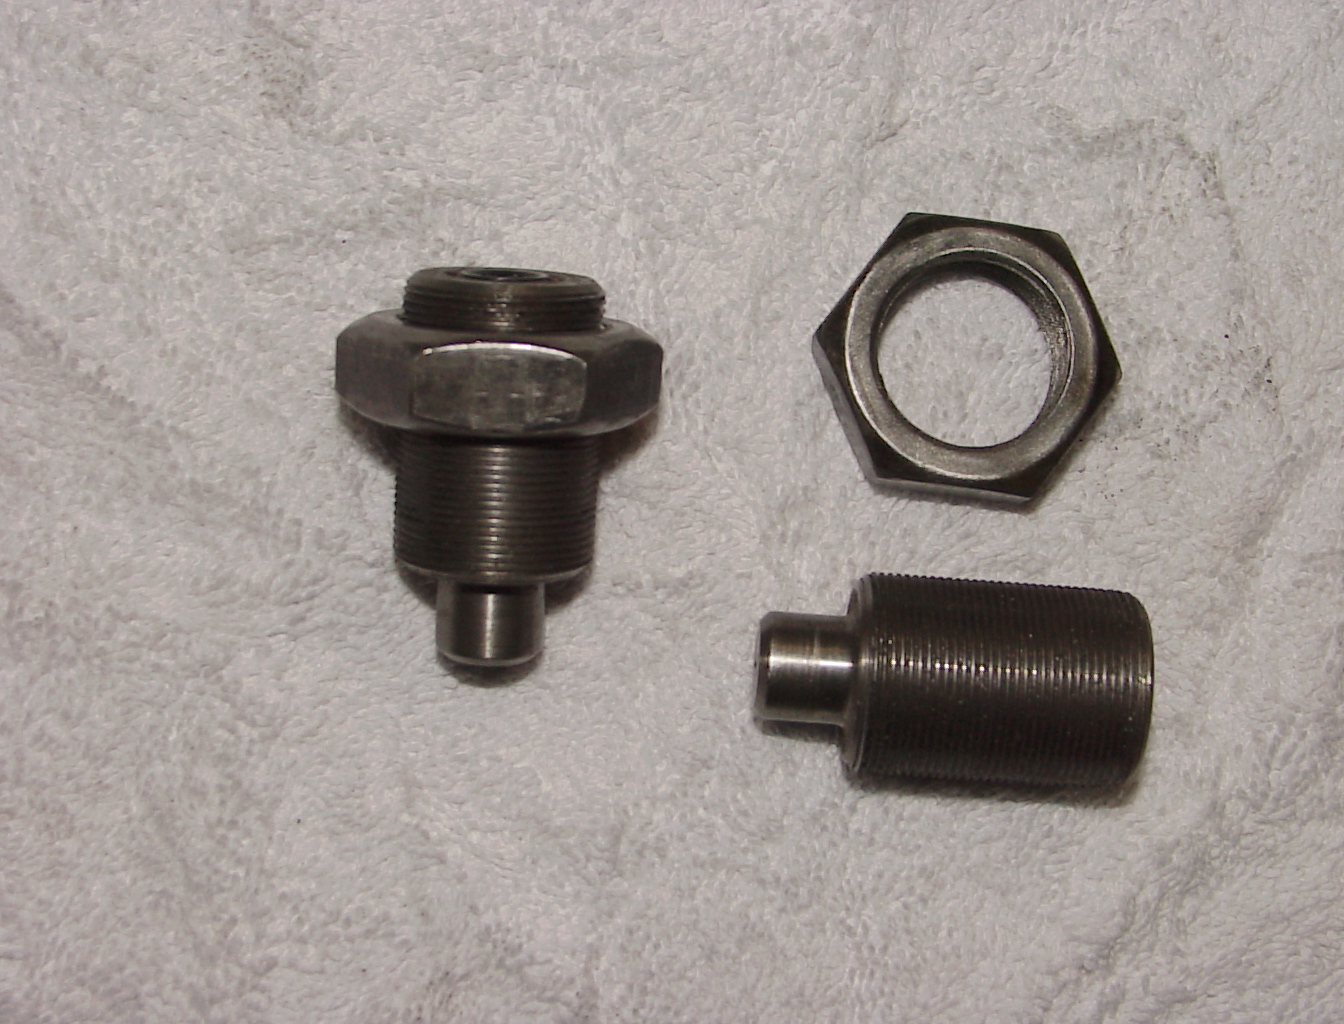 Bearing screw and lock nut(lock:rd50339780257 Screw:rd50339730000)